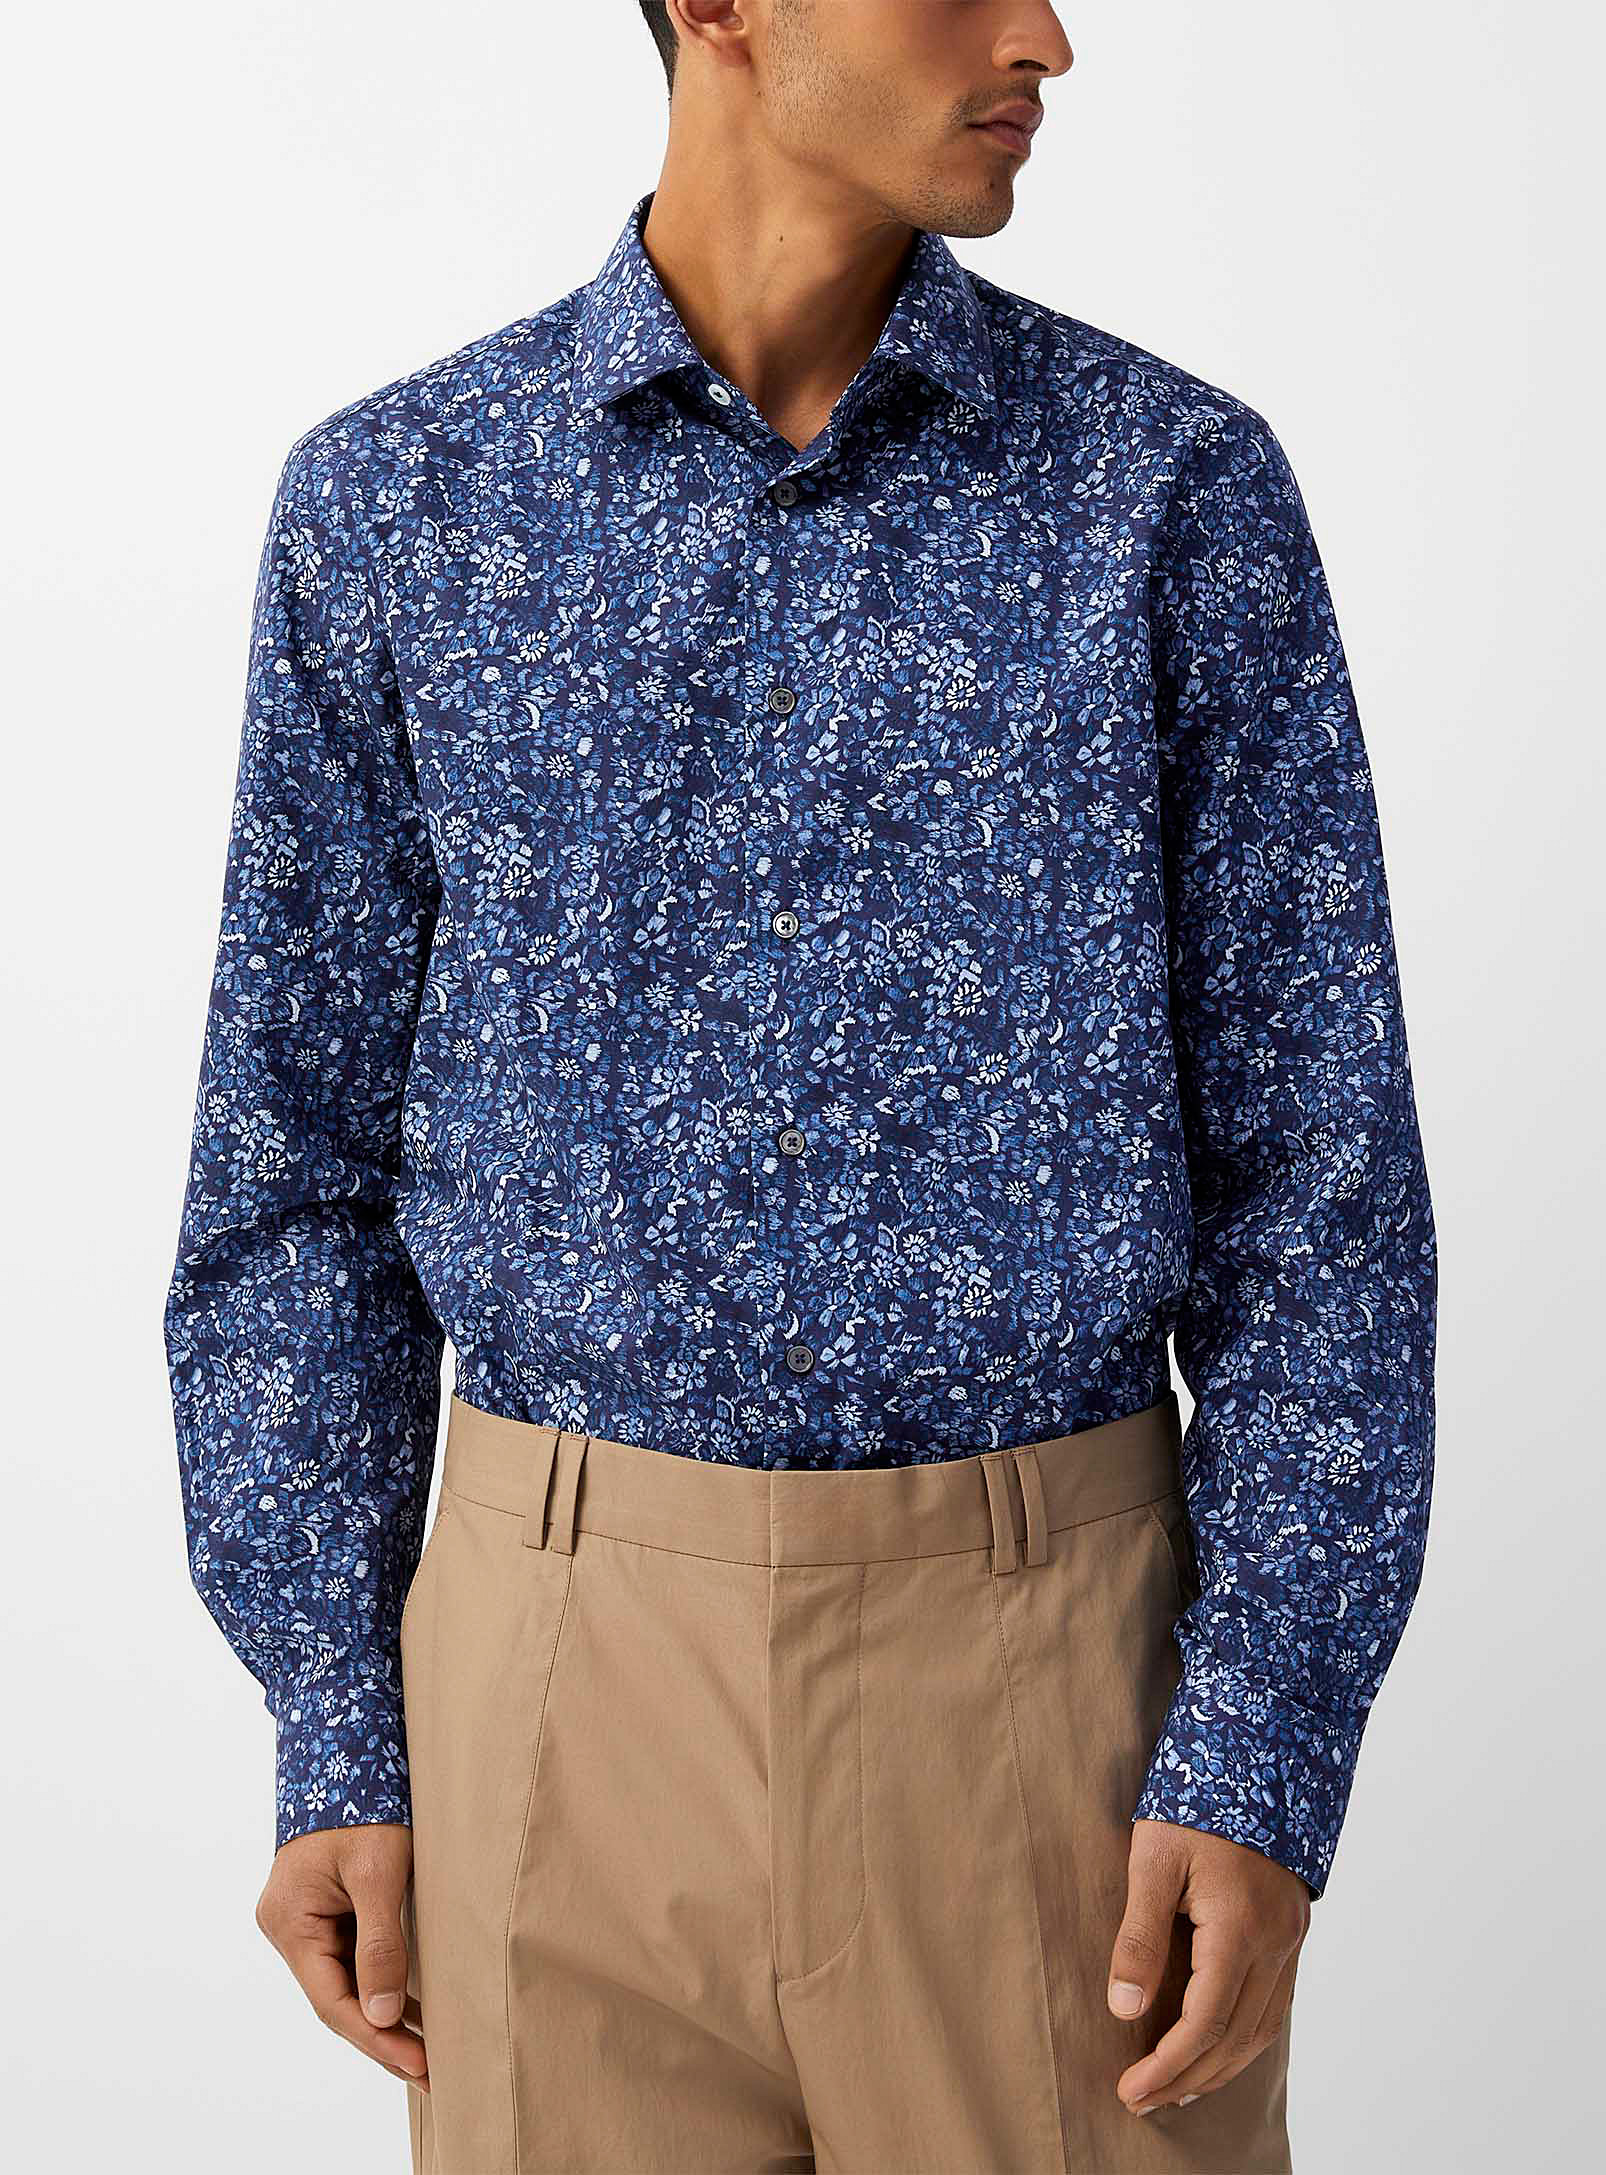 Paul Smith - Men's Cobalt flowers shirt